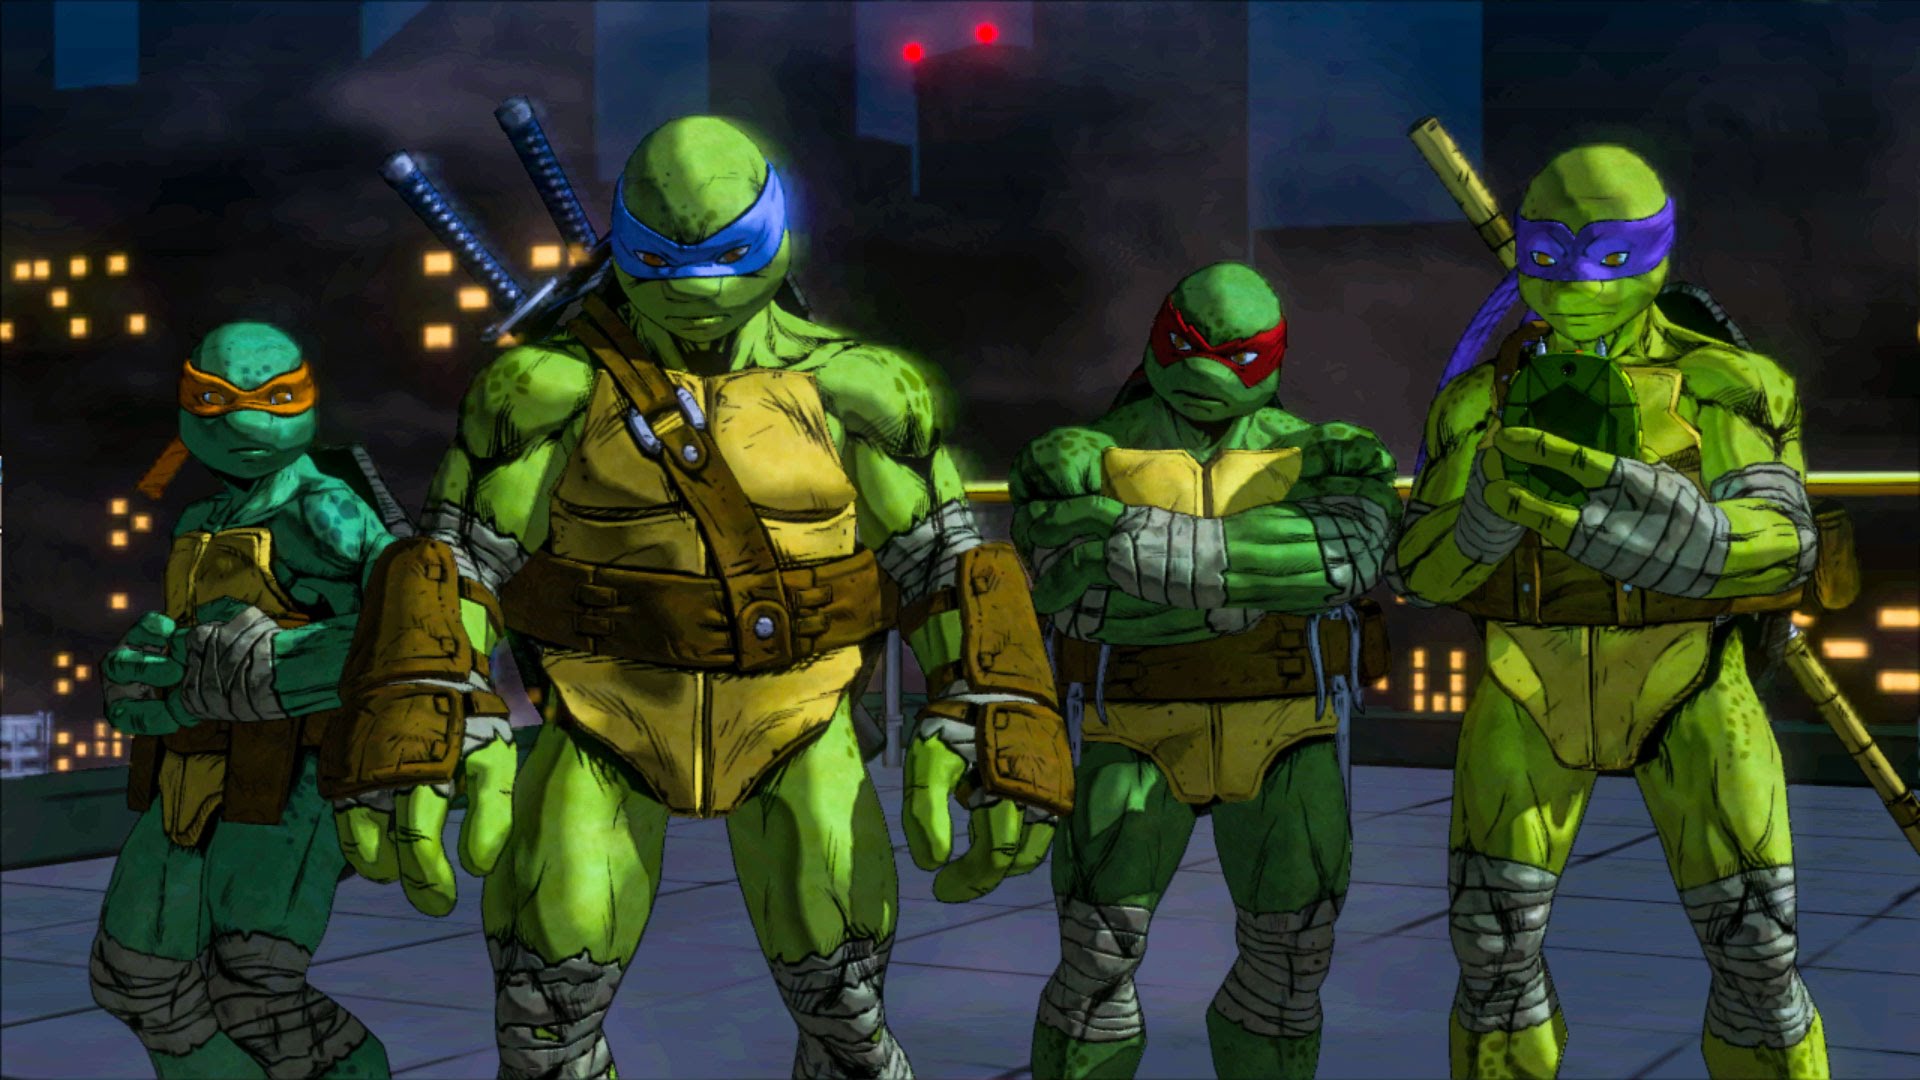 Teenage Mutant Ninja Turtles: Mutants In Manhattan Backgrounds, Compatible - PC, Mobile, Gadgets| 1920x1080 px